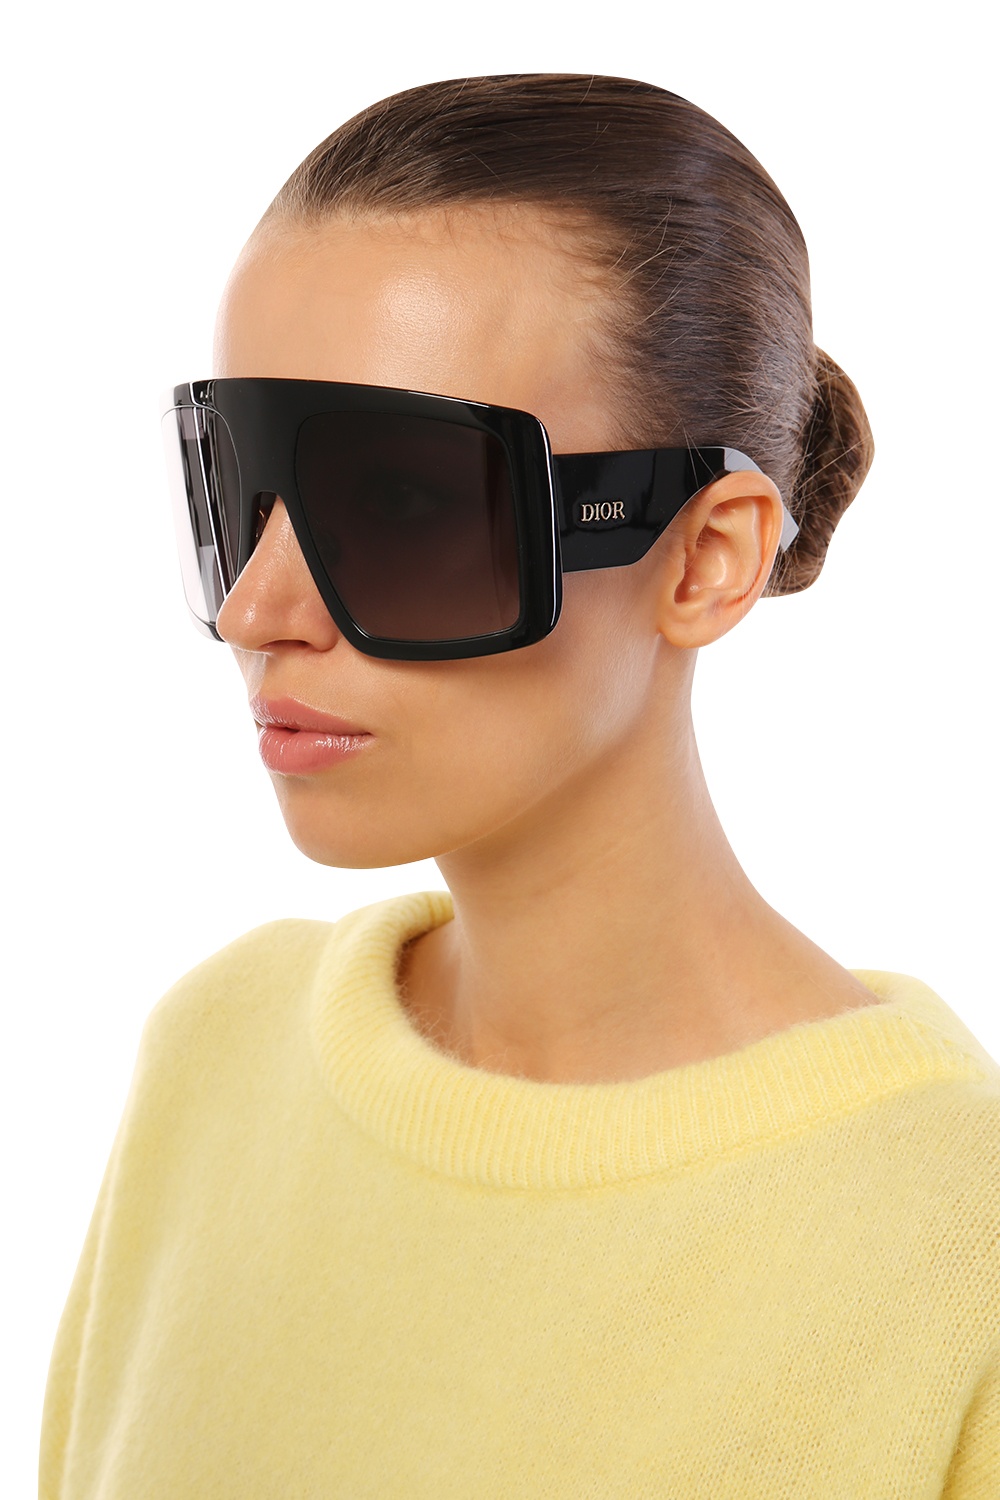 dior solight1 sunglasses